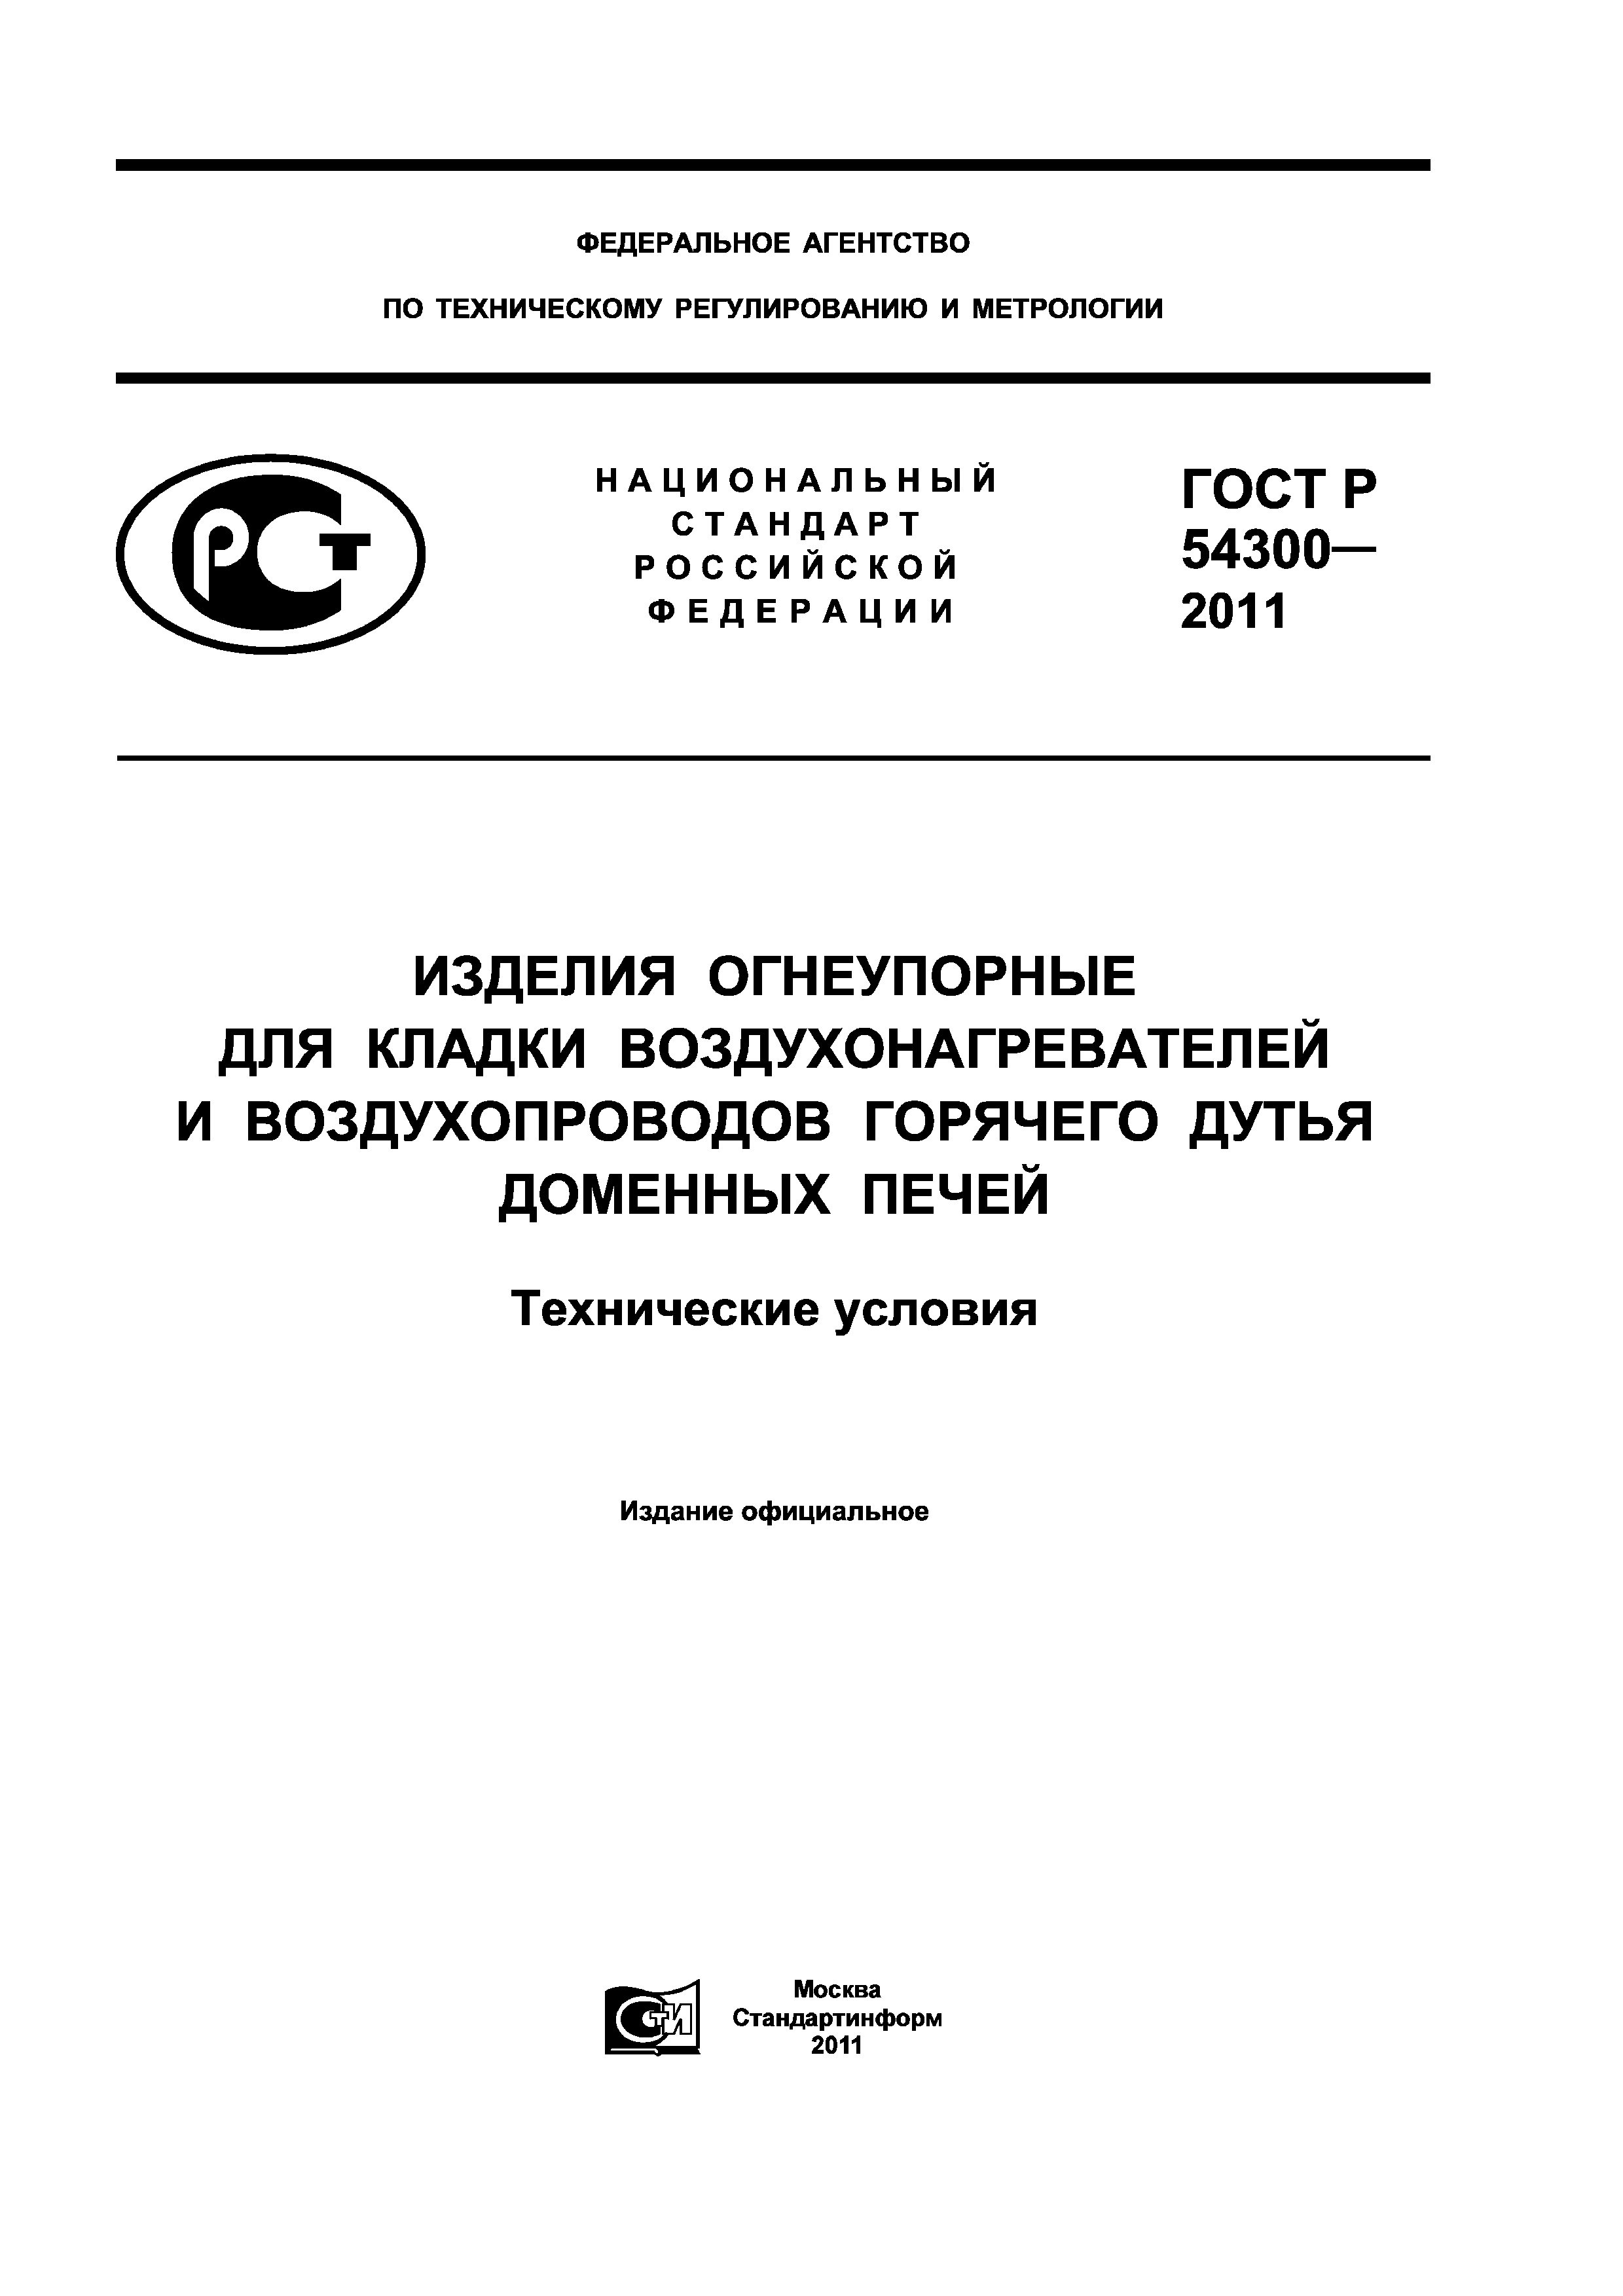 ГОСТ Р 54300-2011